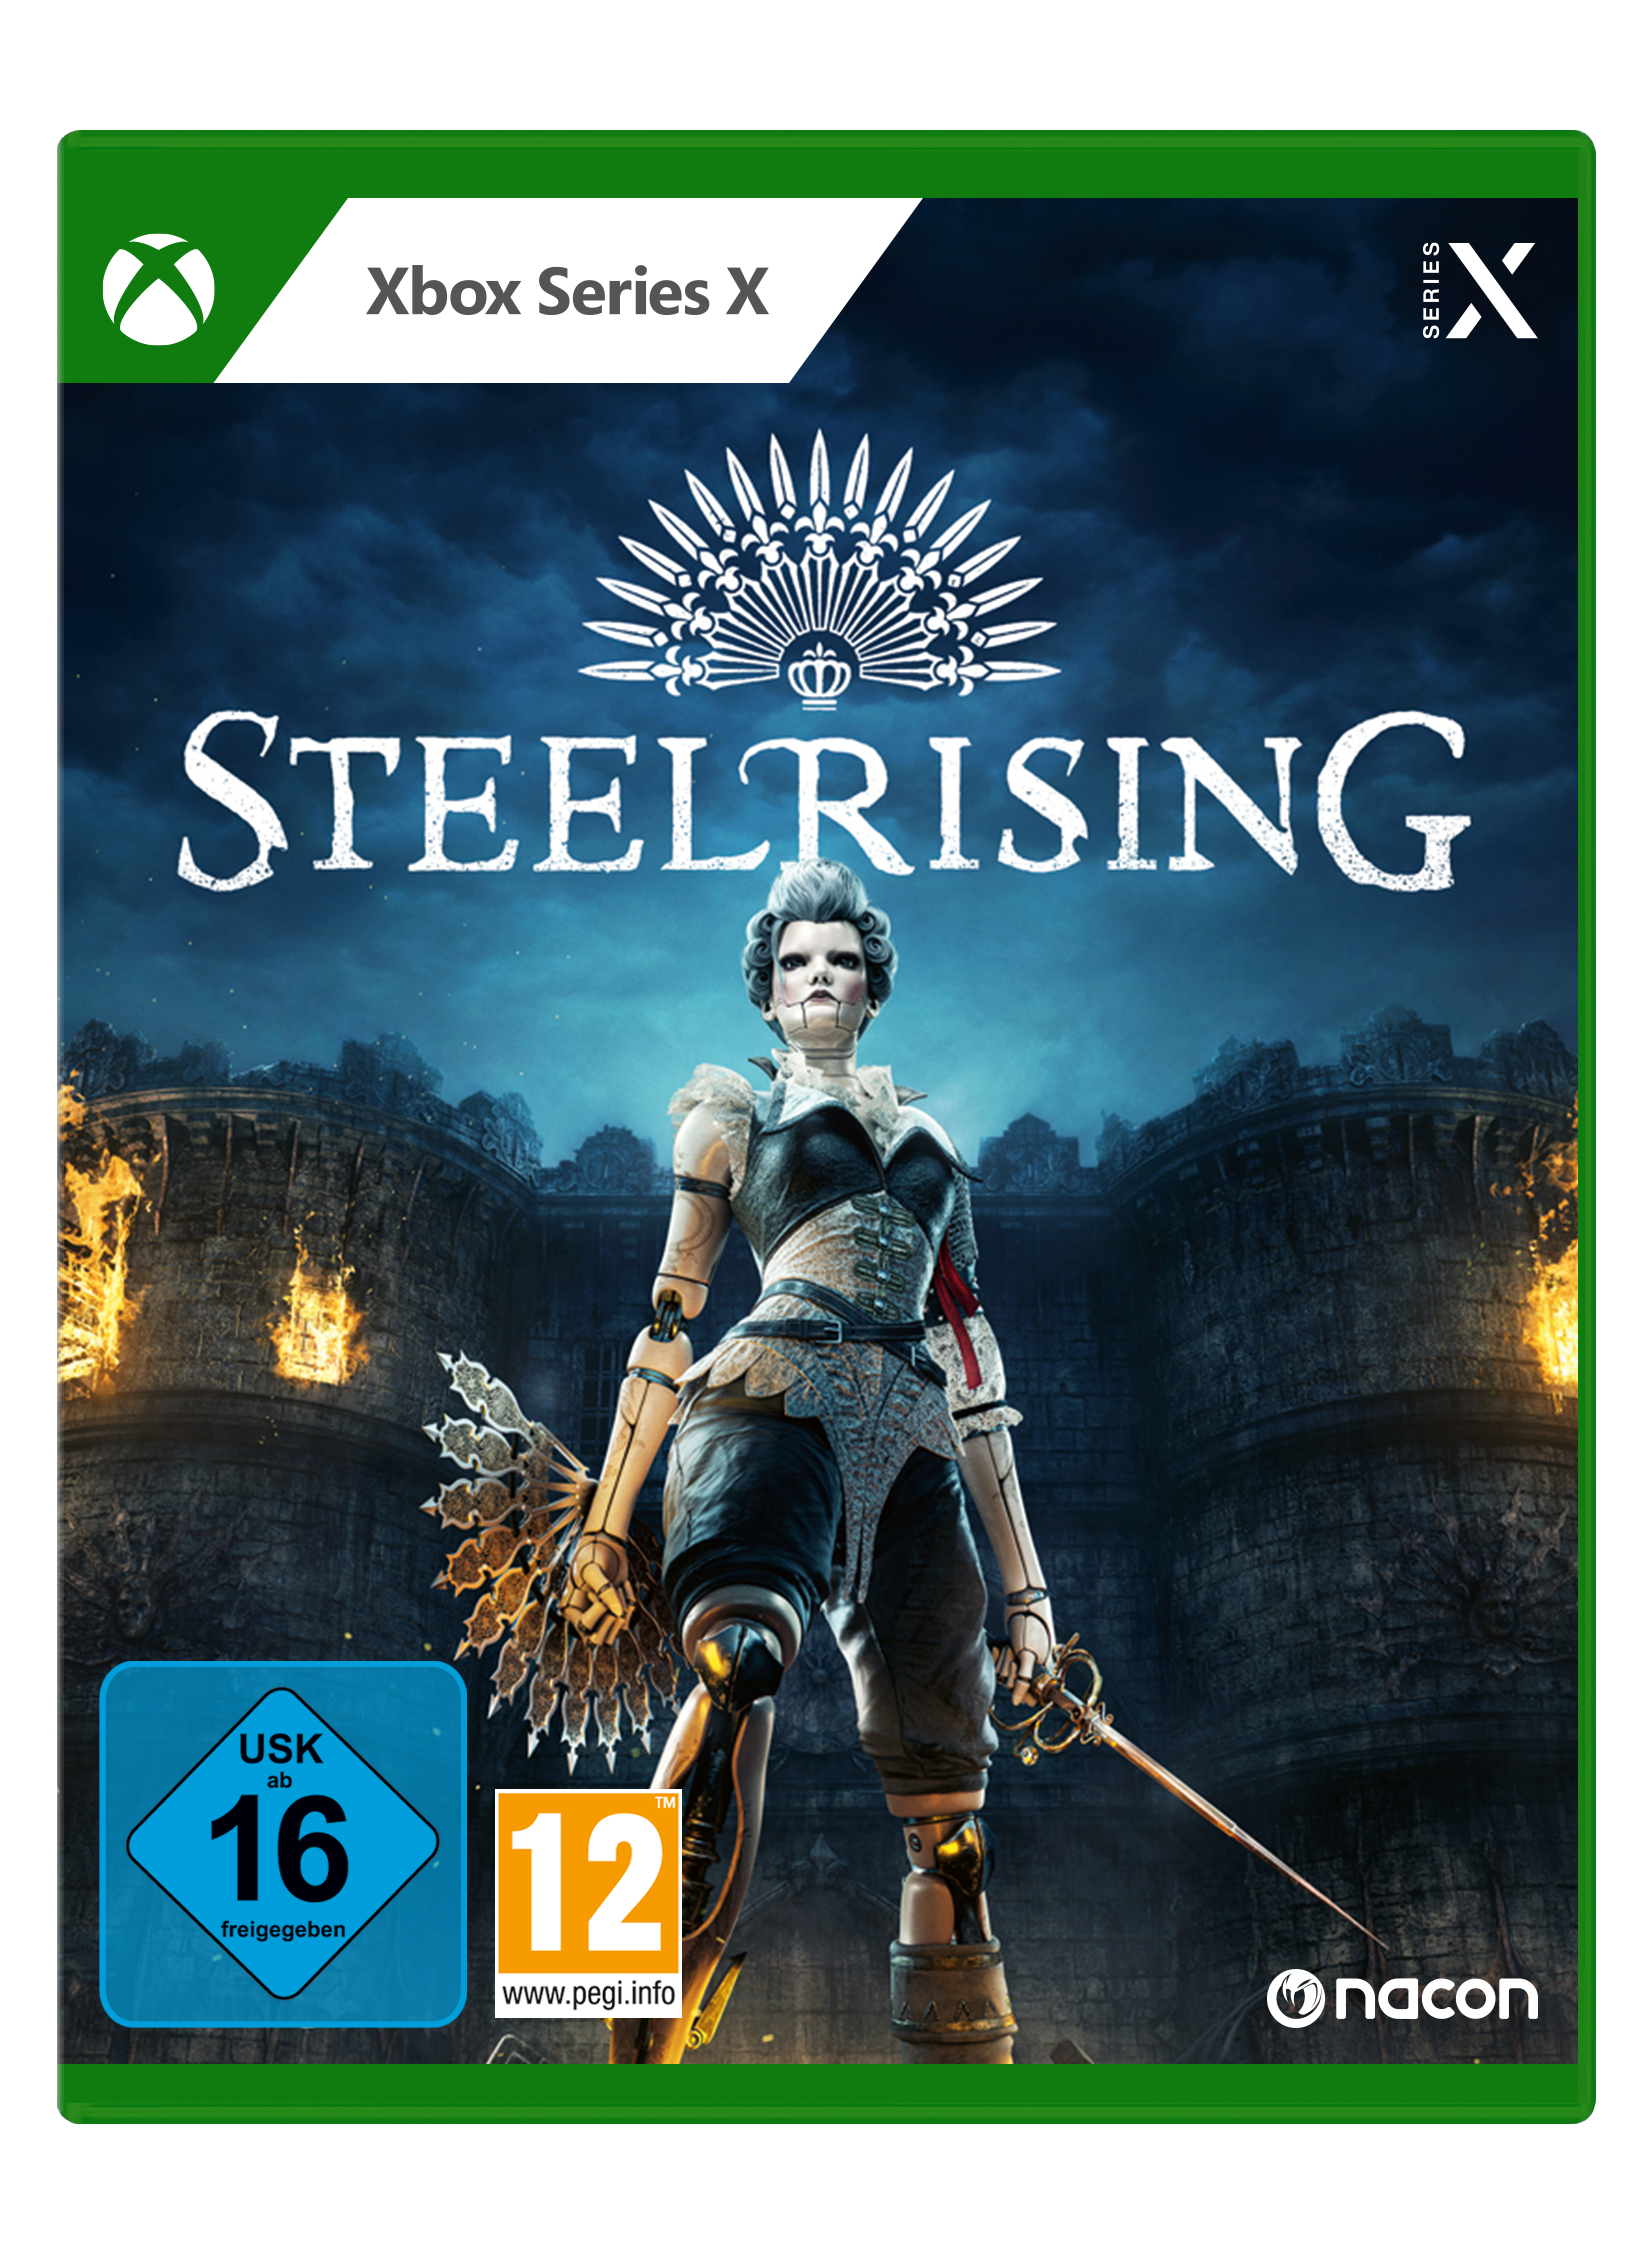 Steelrising - X|S] [Xbox Series